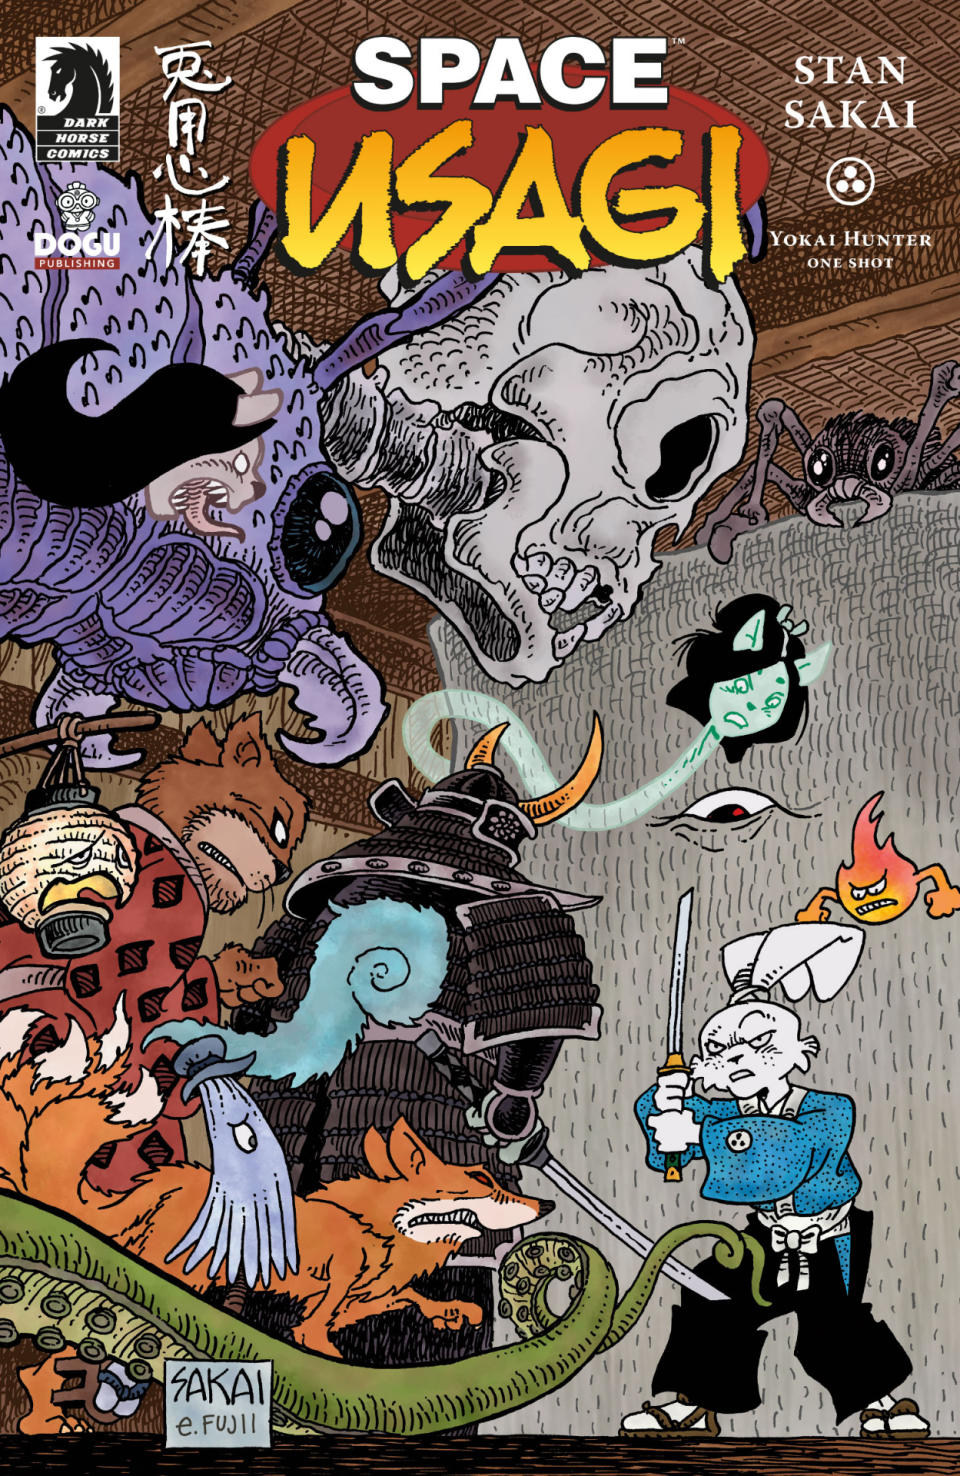 Space Usagi: Yokai Hunter #1 cover art